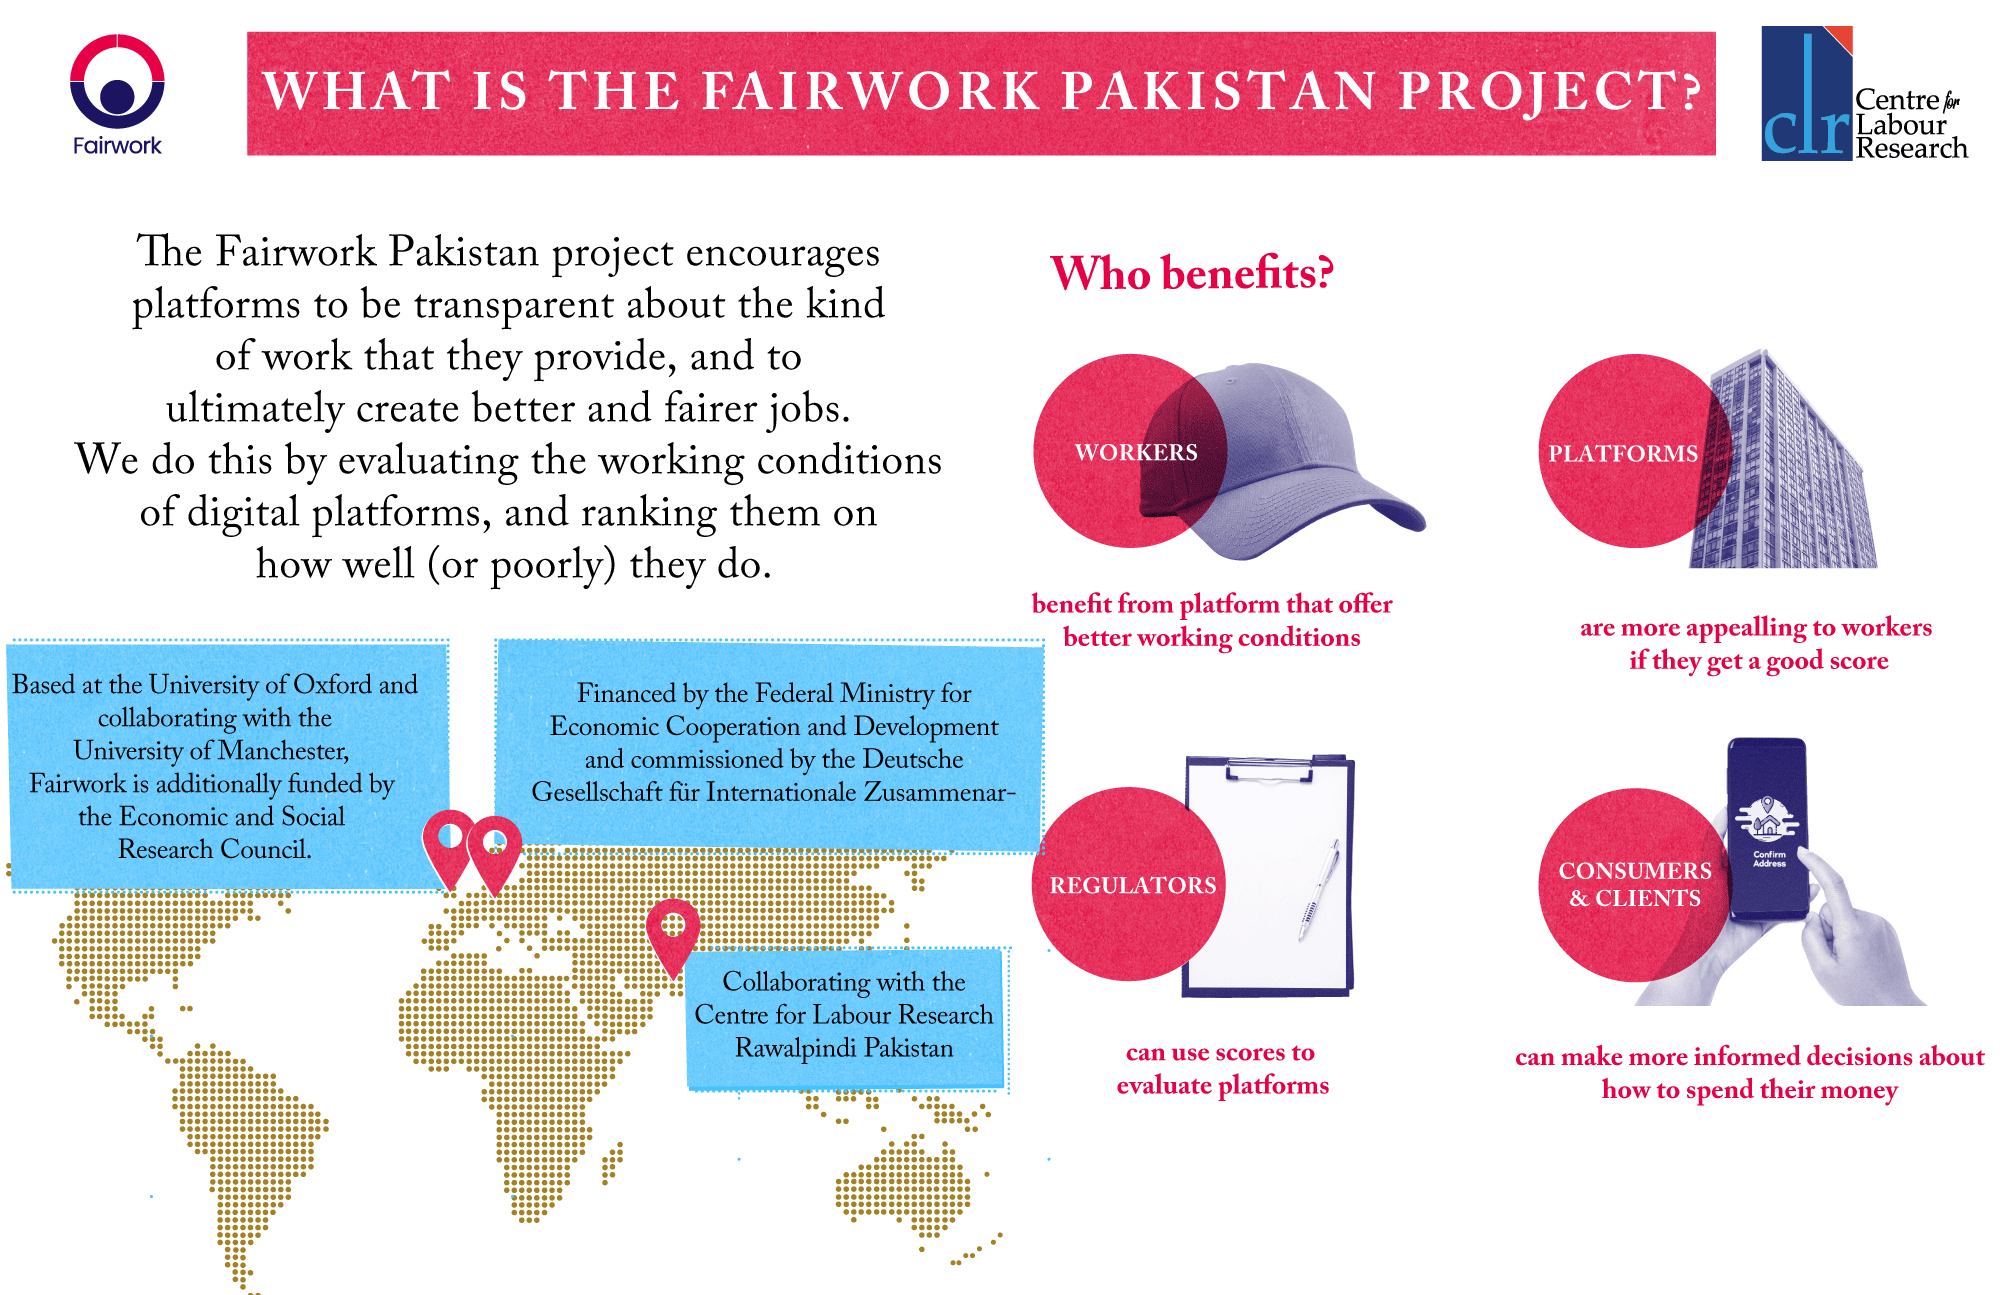 CLR Fairwork collaboration in Pakistan